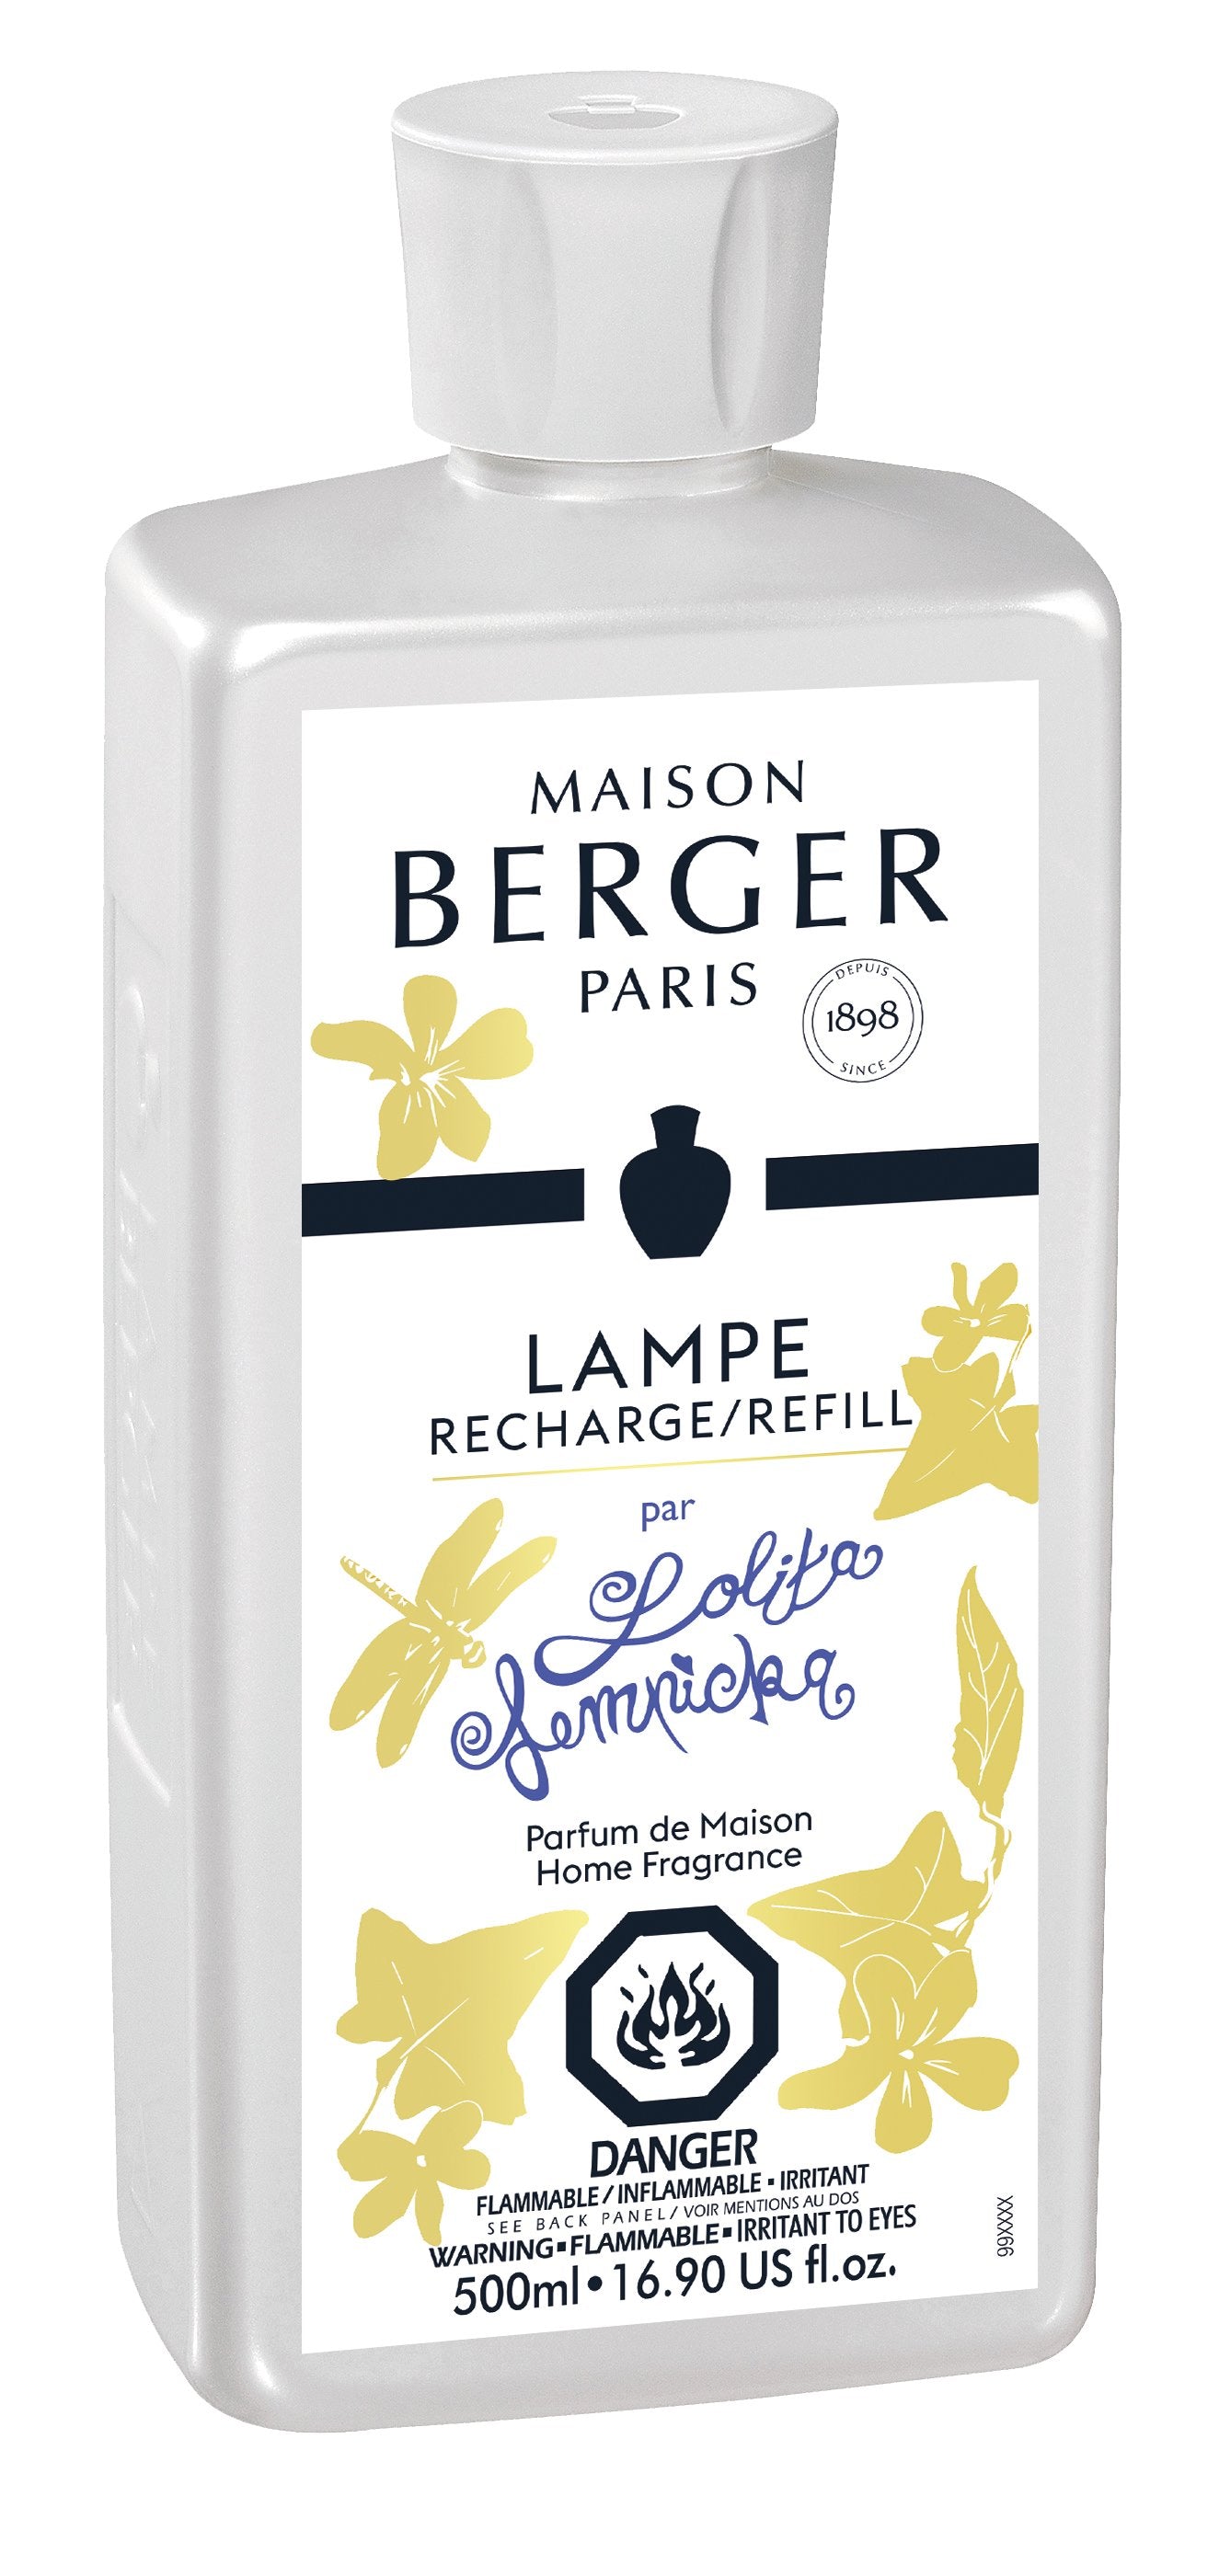 Lolita Lempicka 200ml Diffuser Oil refill by Lampe Berger